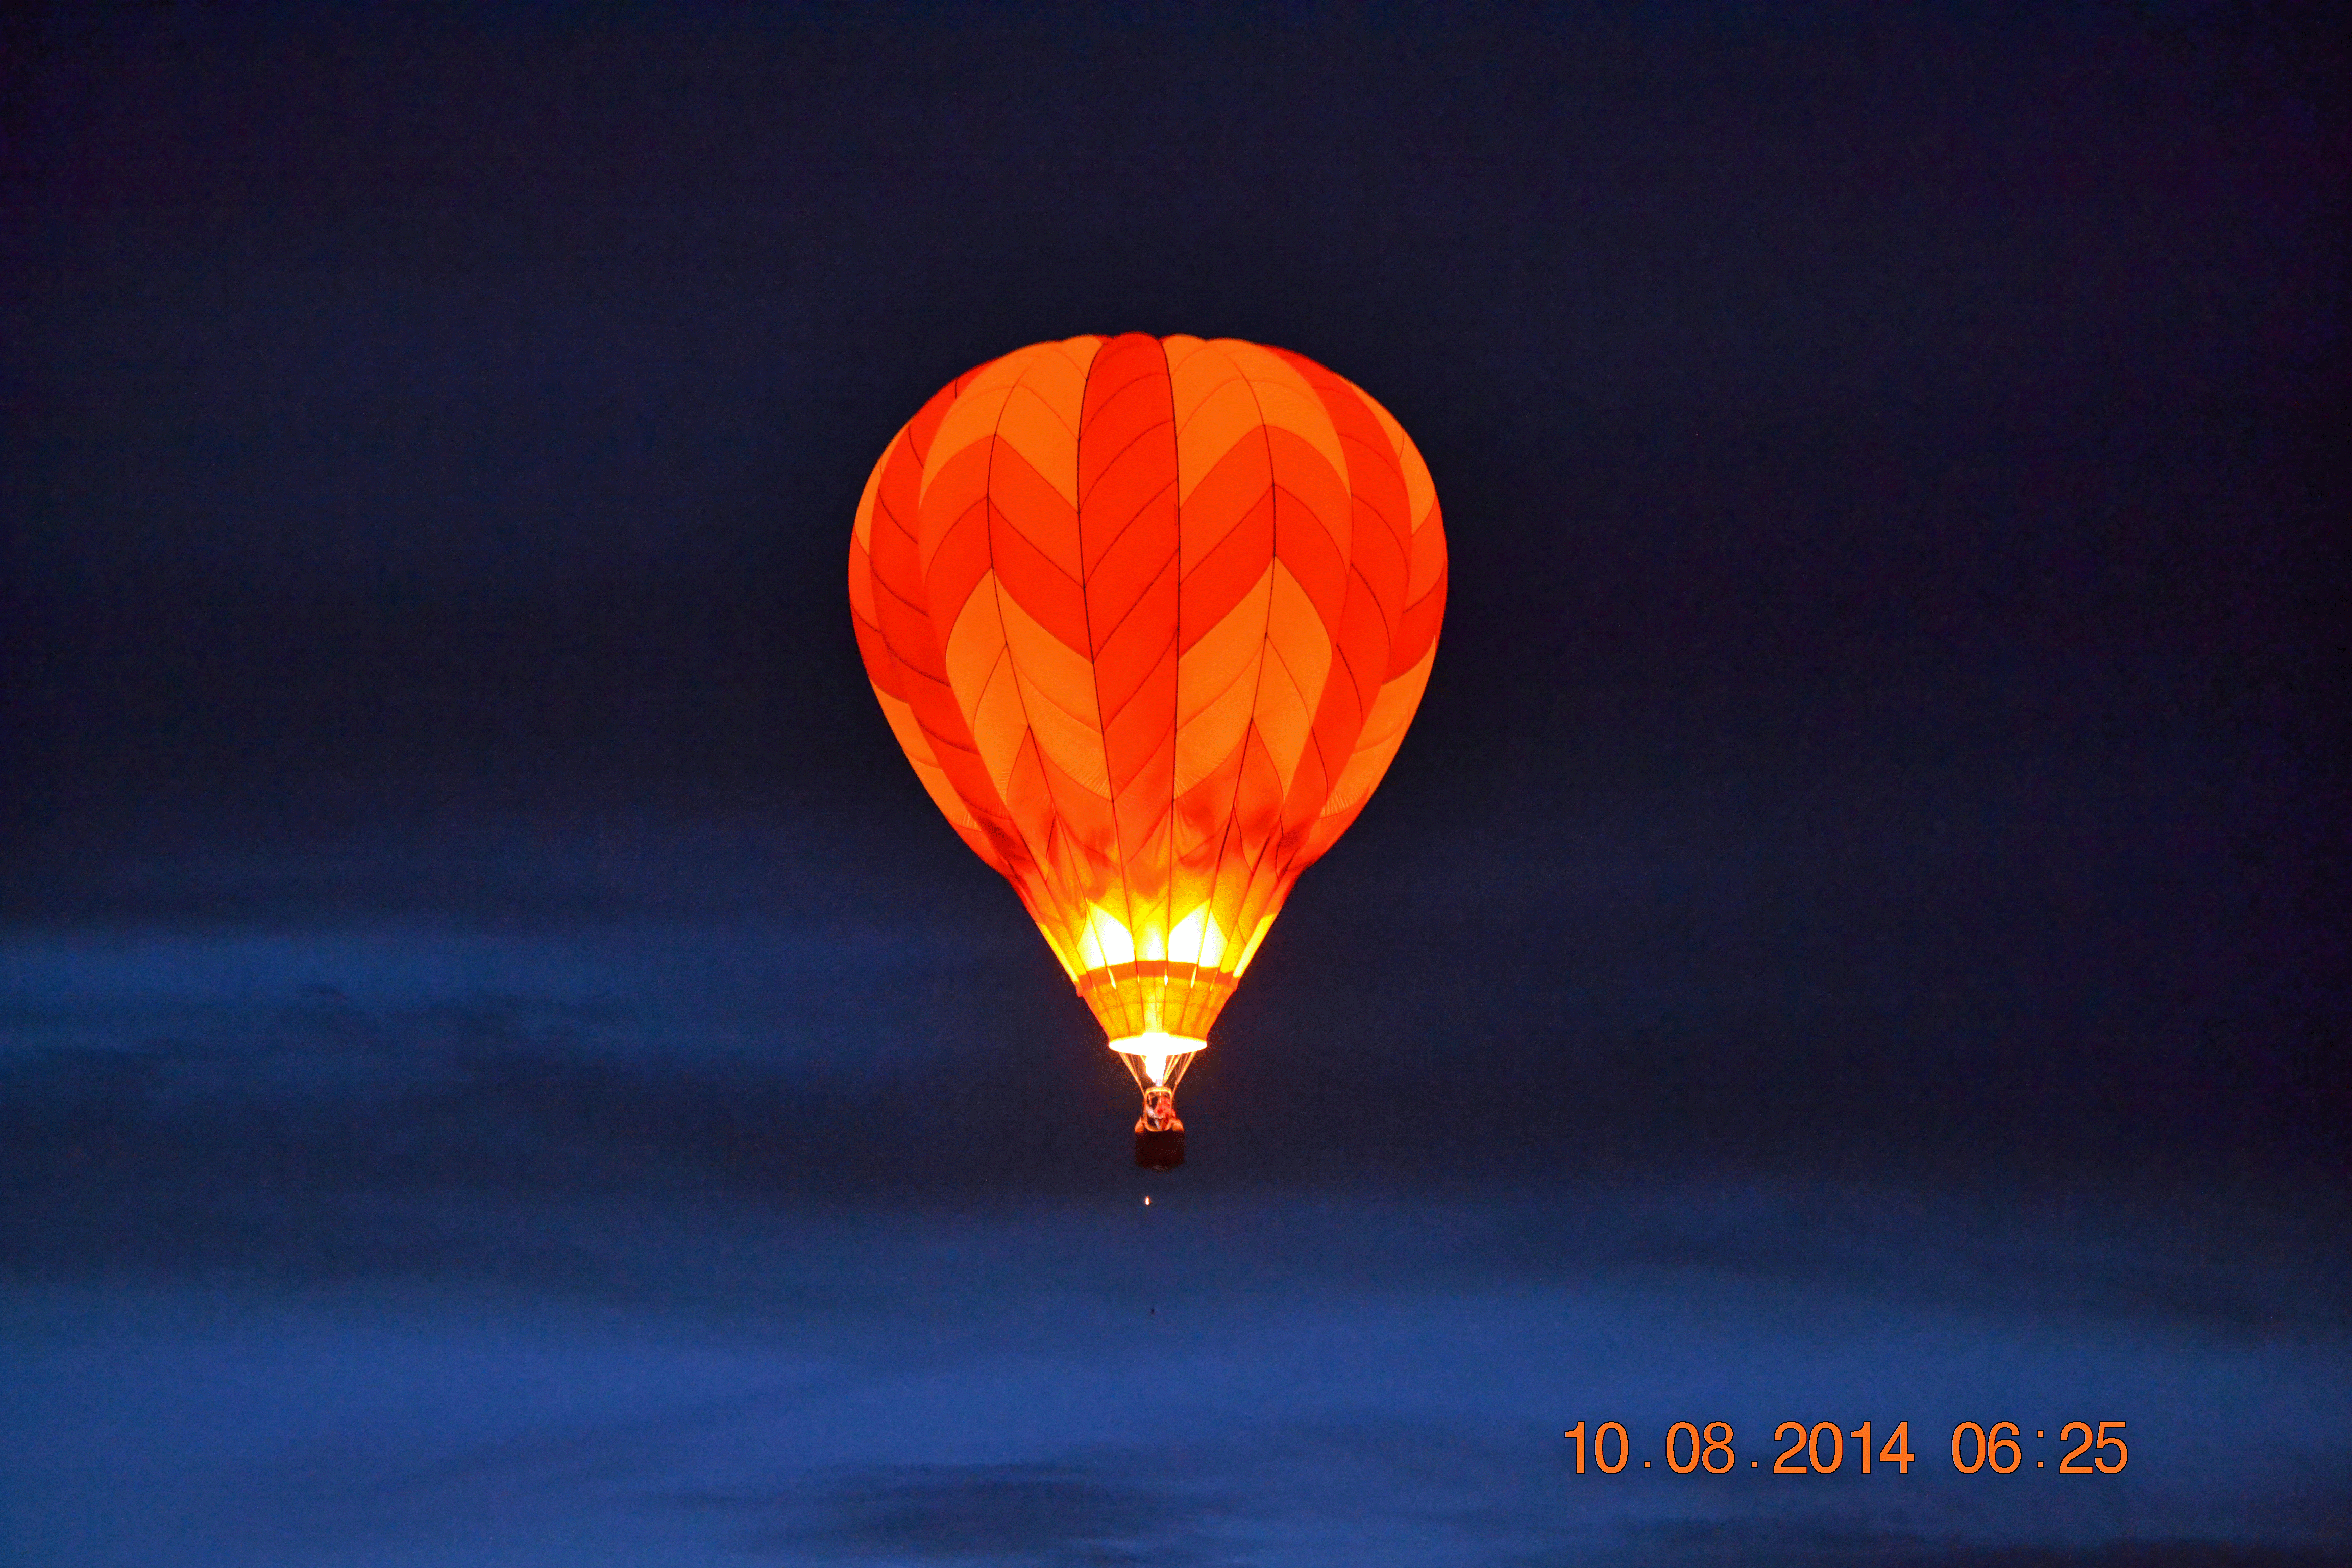 dawn patrol balloon